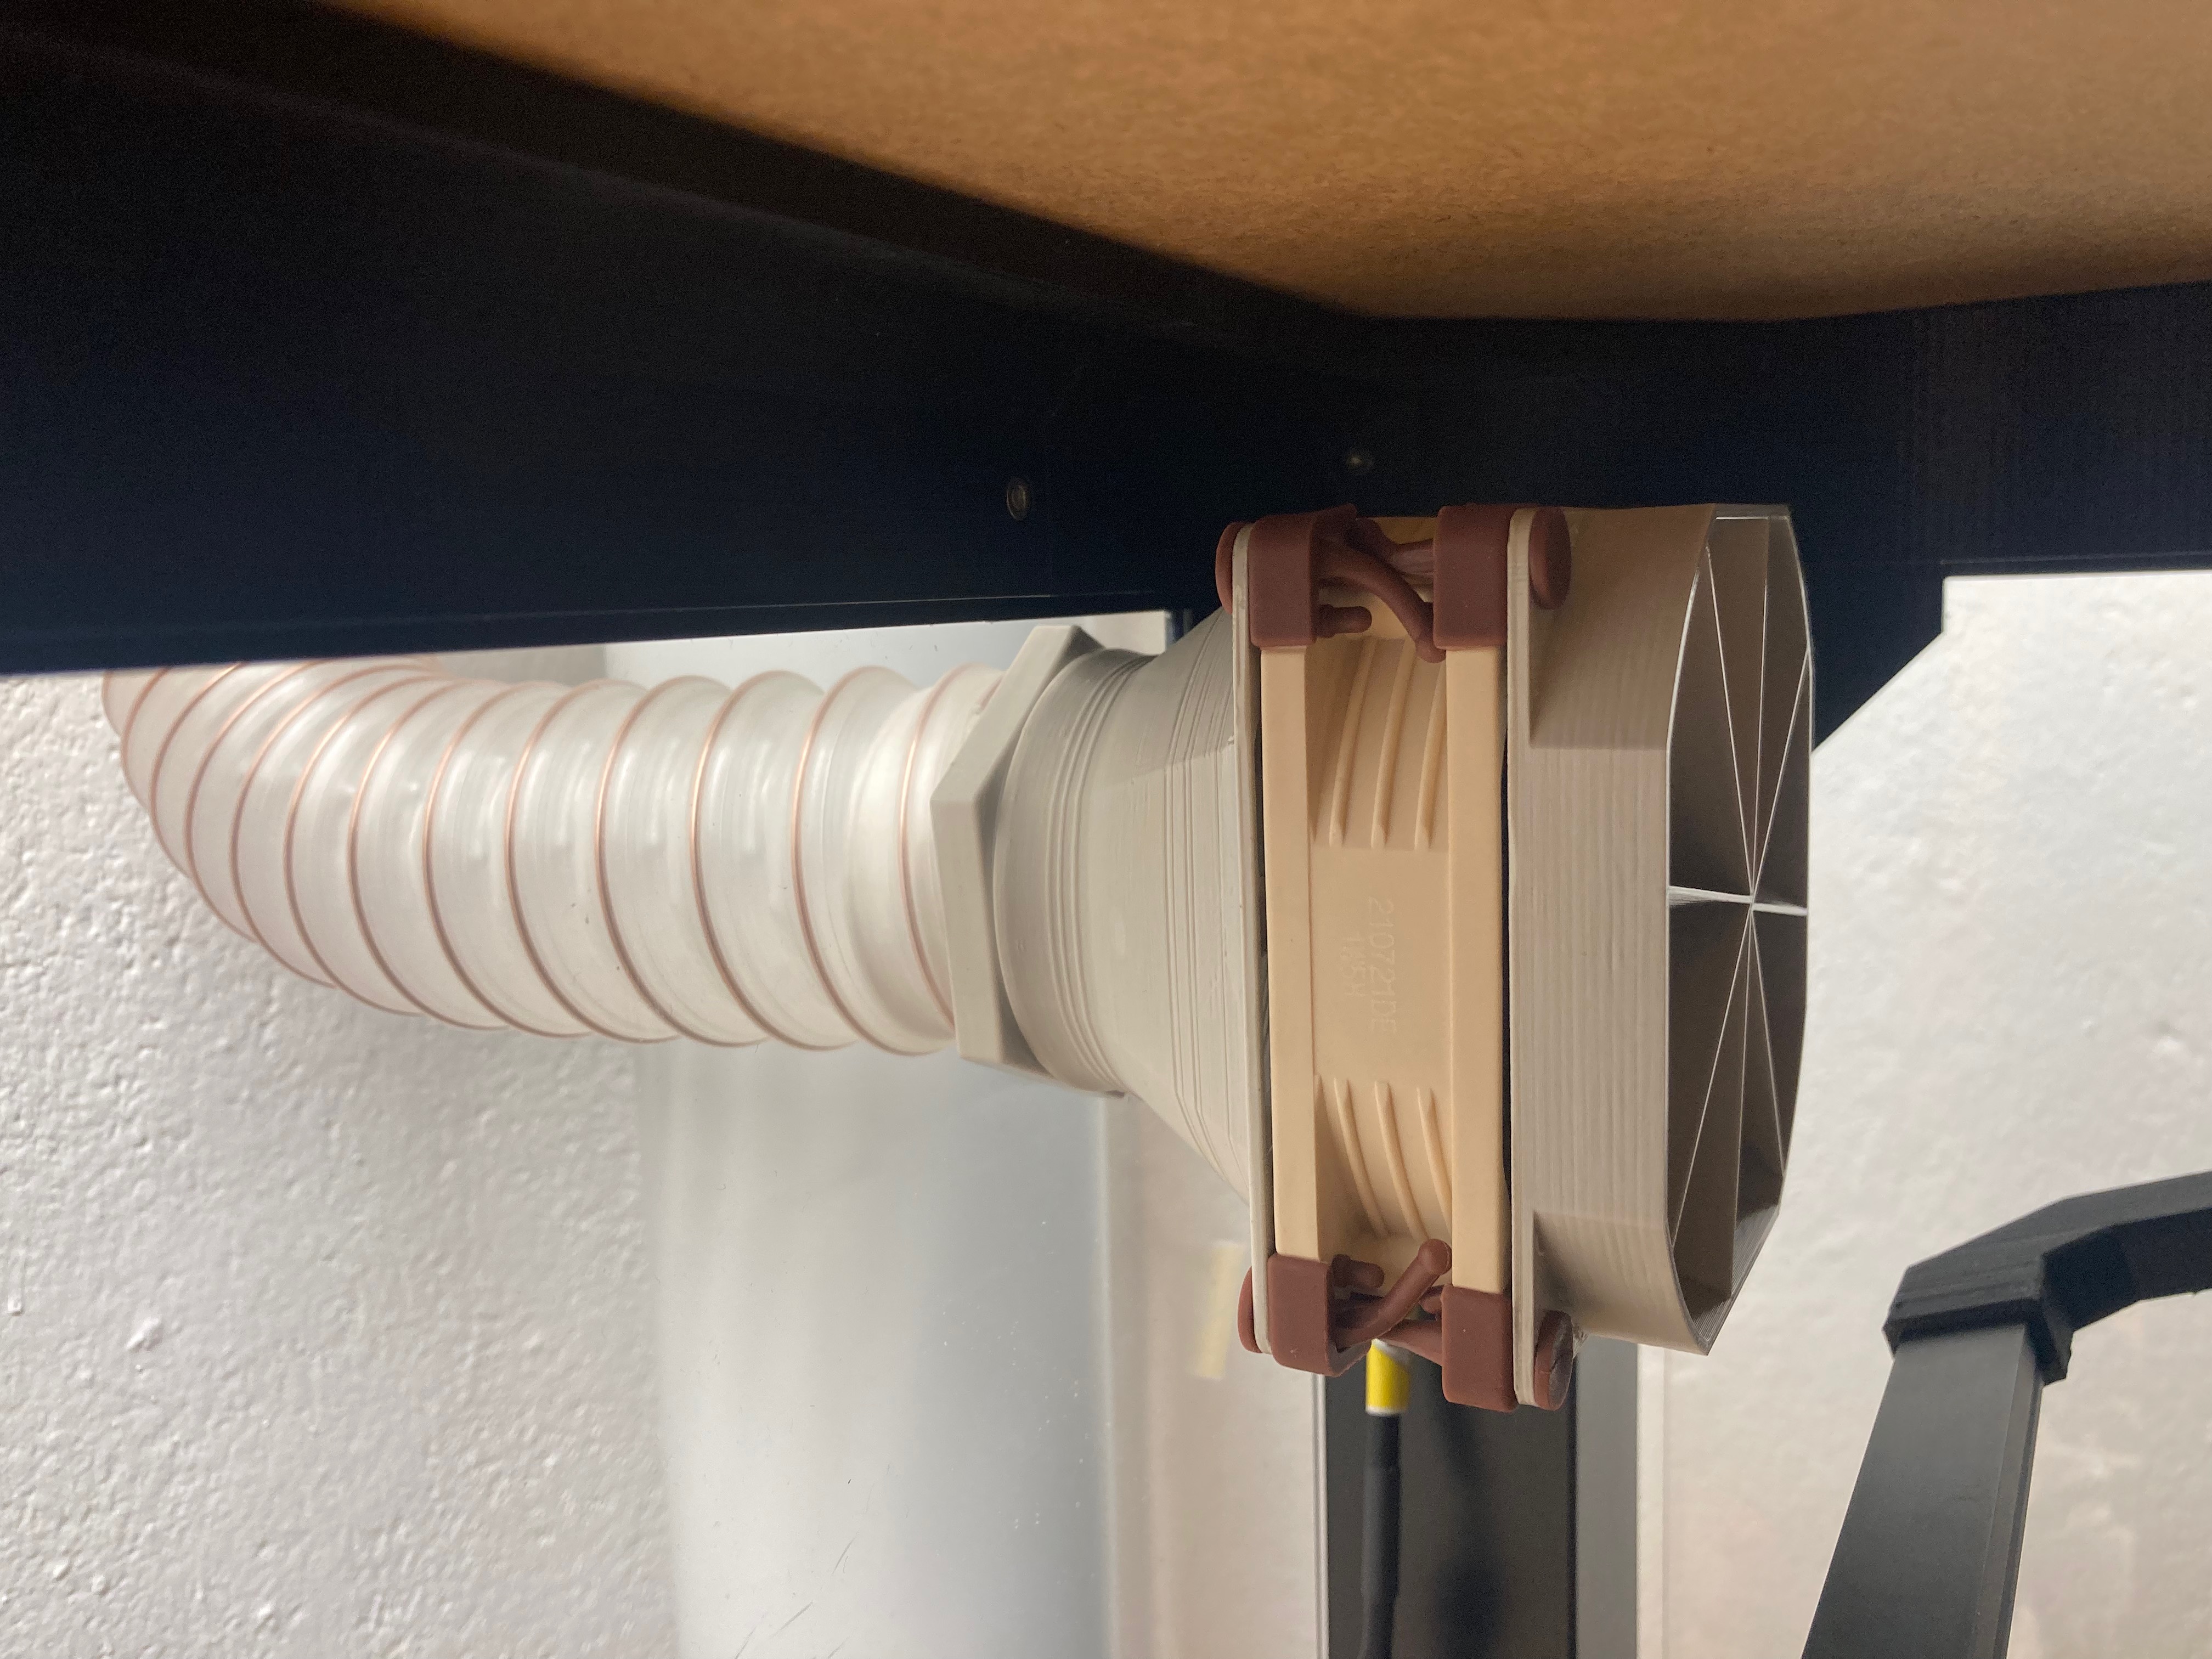 Enclosure fan ventilation (Ikea Lack) for a 92 mm fan with static pressure enhancer (axial compressor)